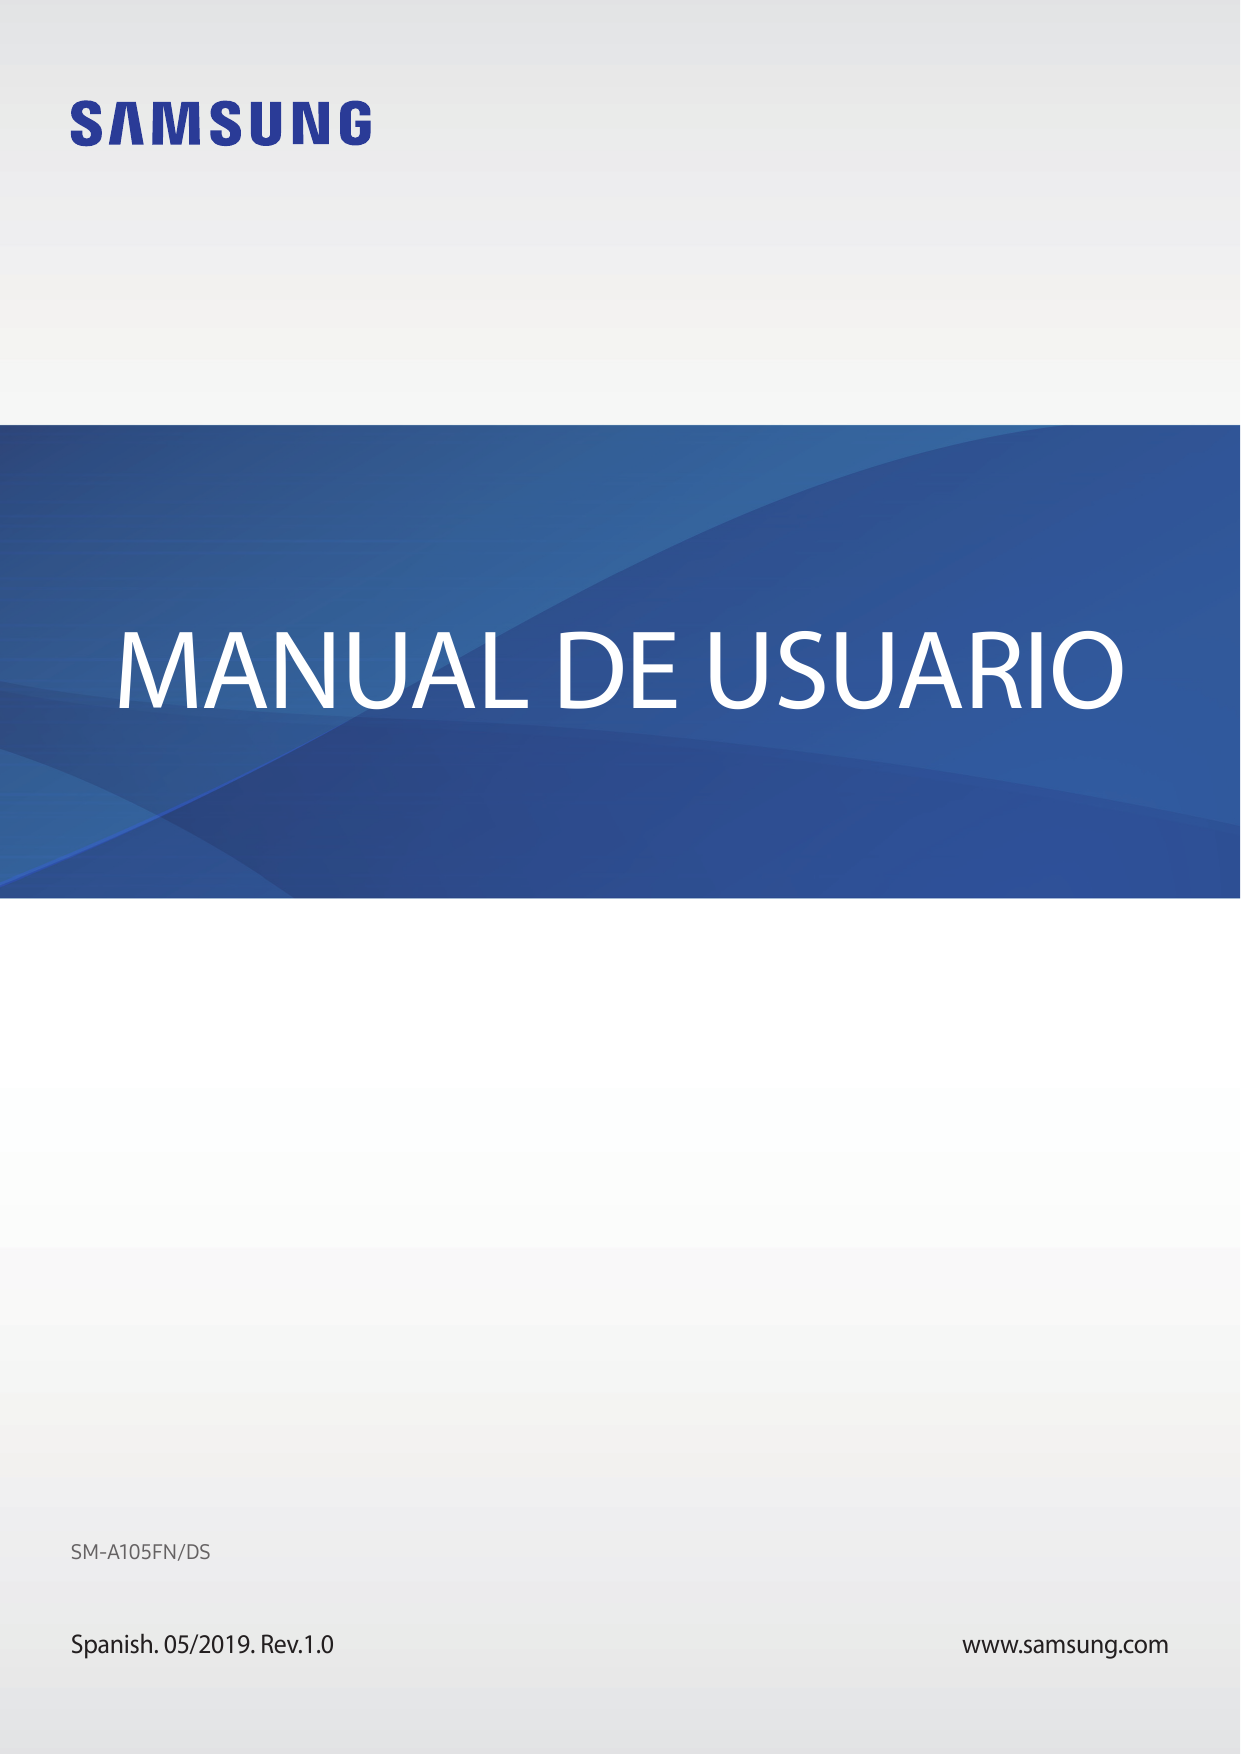 MANUAL DE USUARIOSM-A105FN/DSSpanish. 05/2019. Rev.1.0www.samsung.com